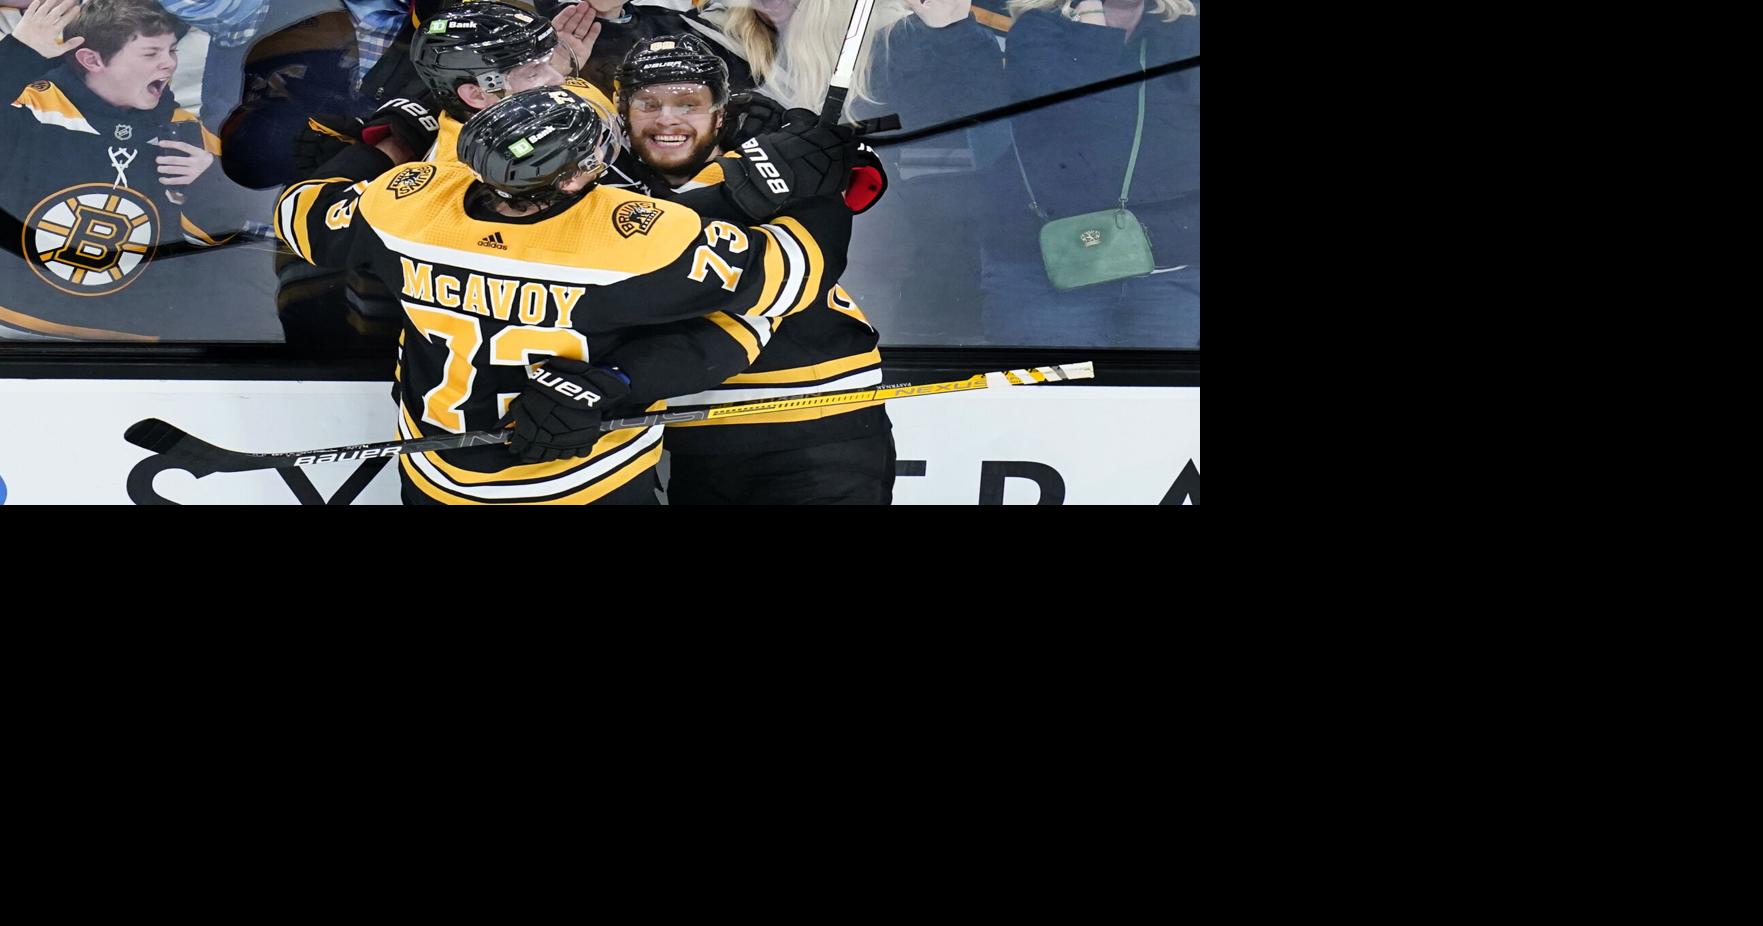 David Pastrnak(32) Providence Bruins